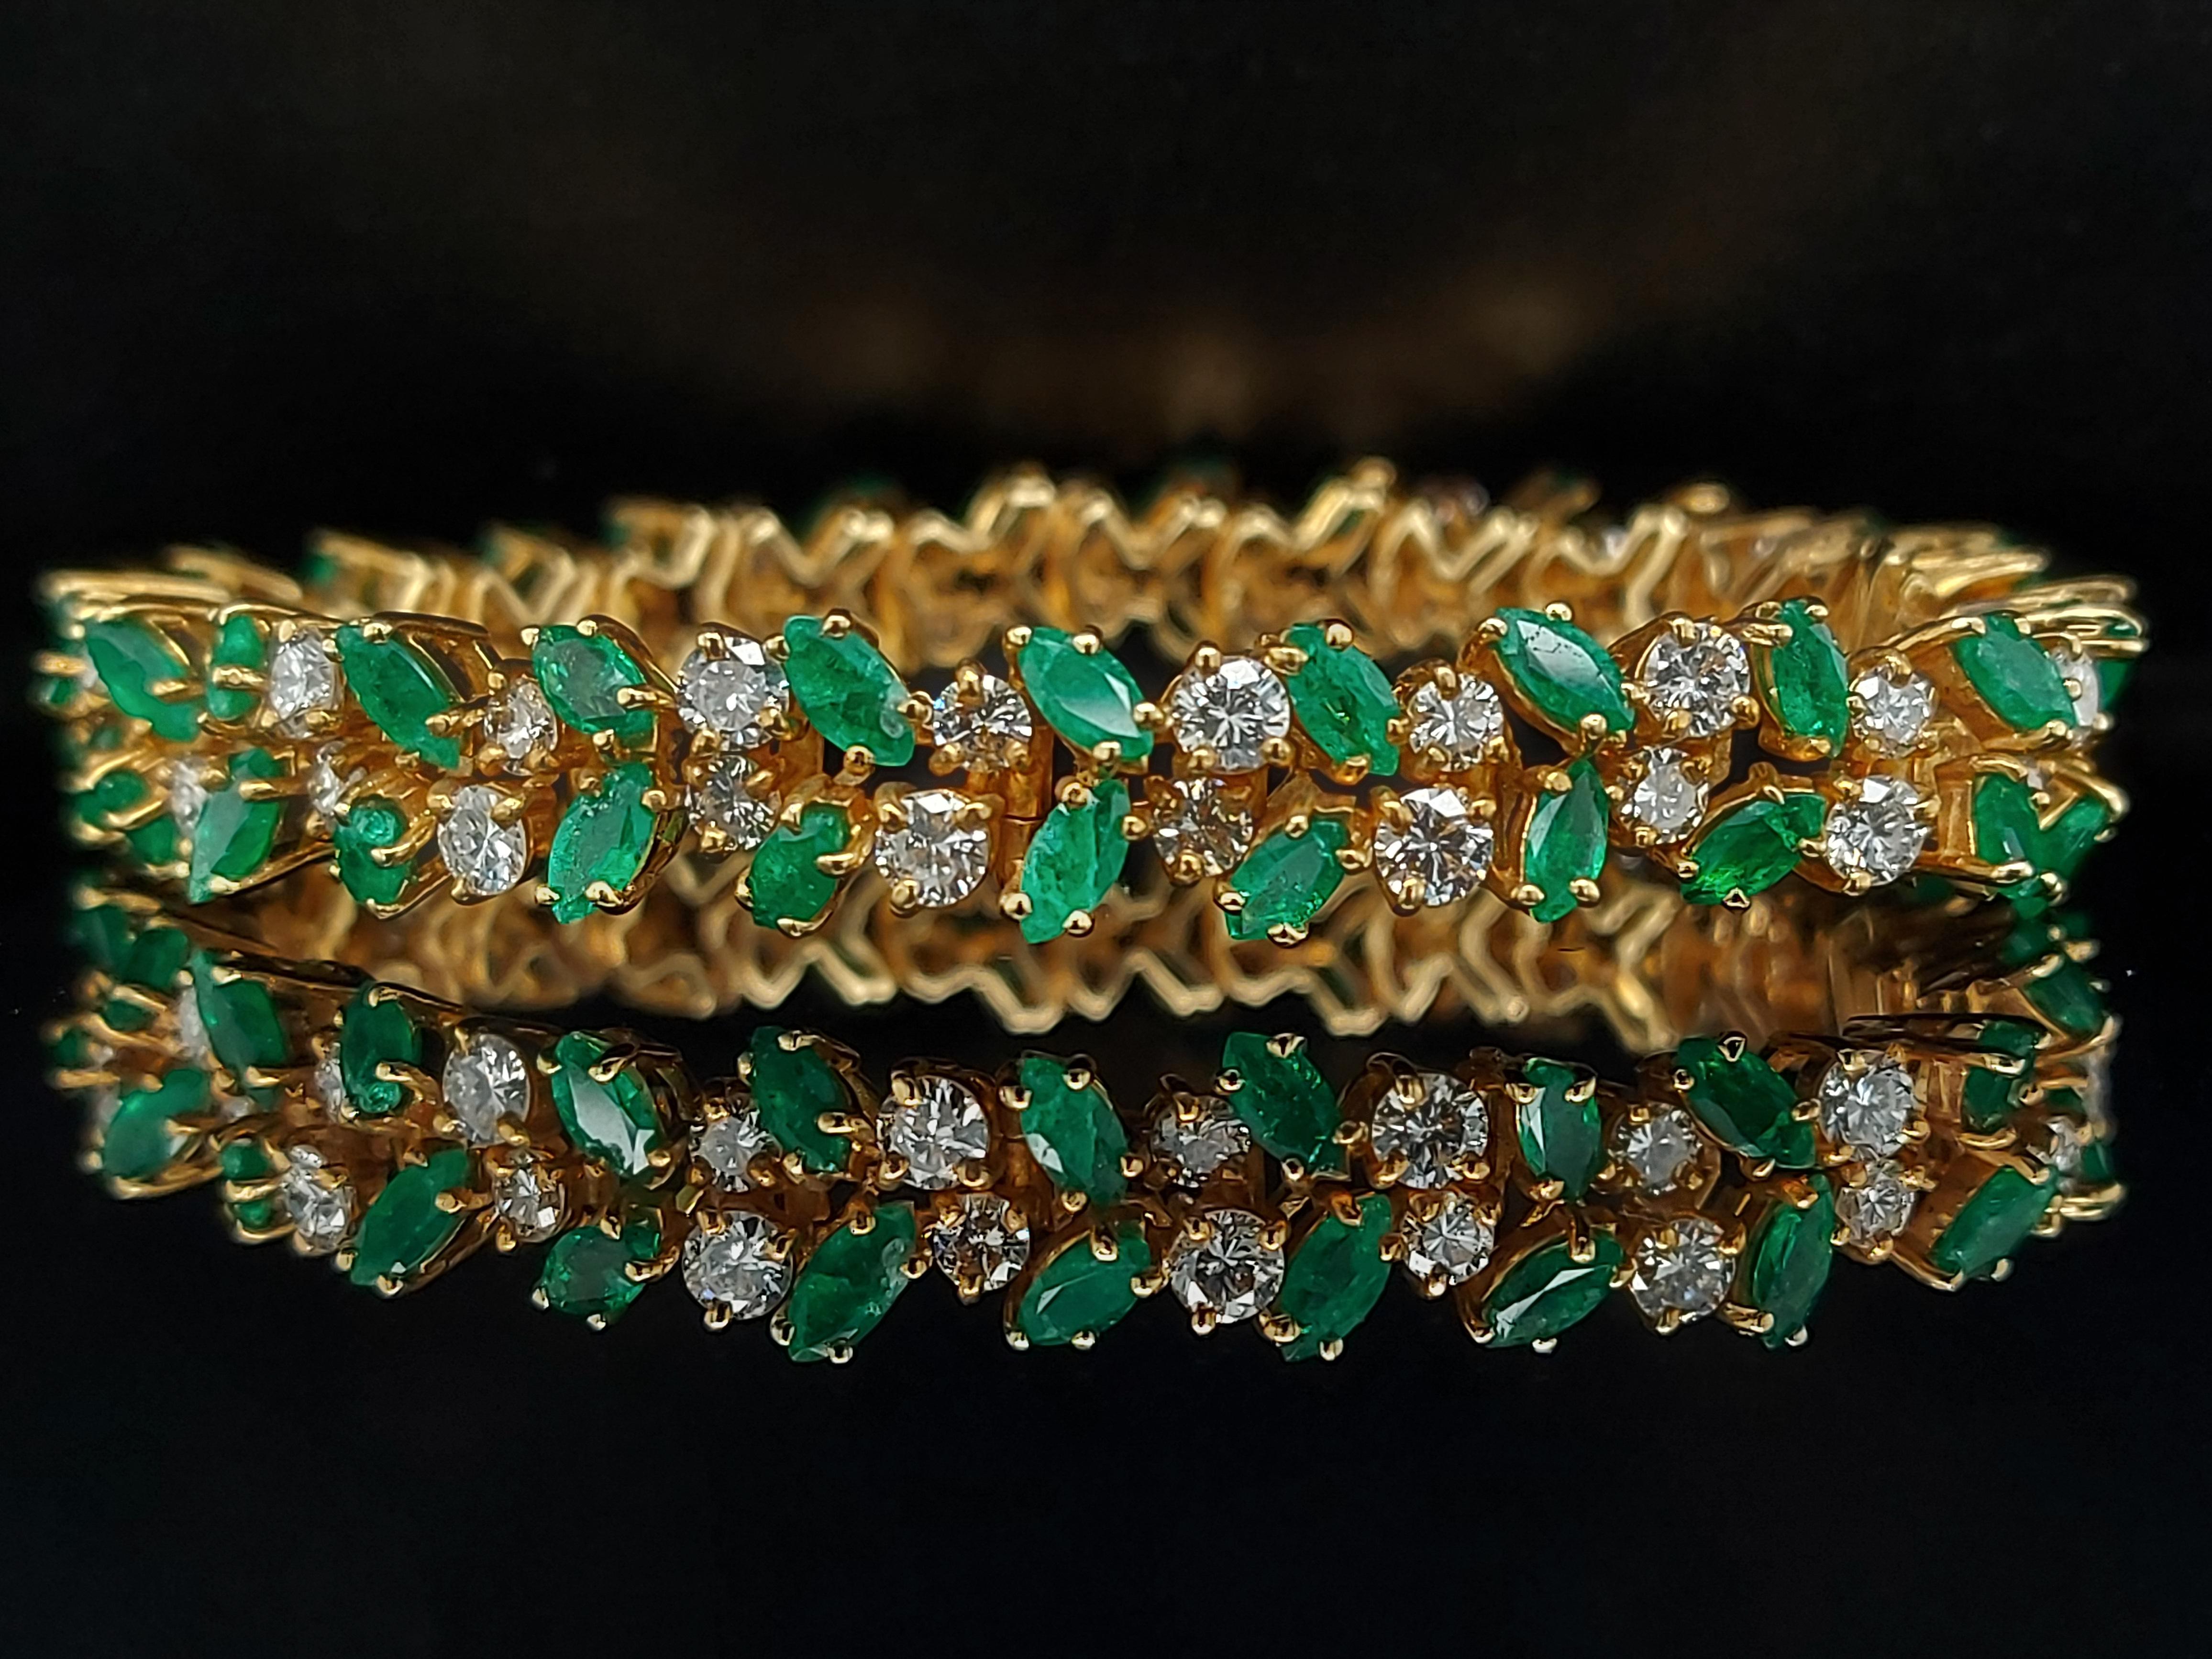 Luxurious 18 Karat Gold Bracelet with 6.75 Carat Diamonds and 10 Carat Emeralds For Sale 1